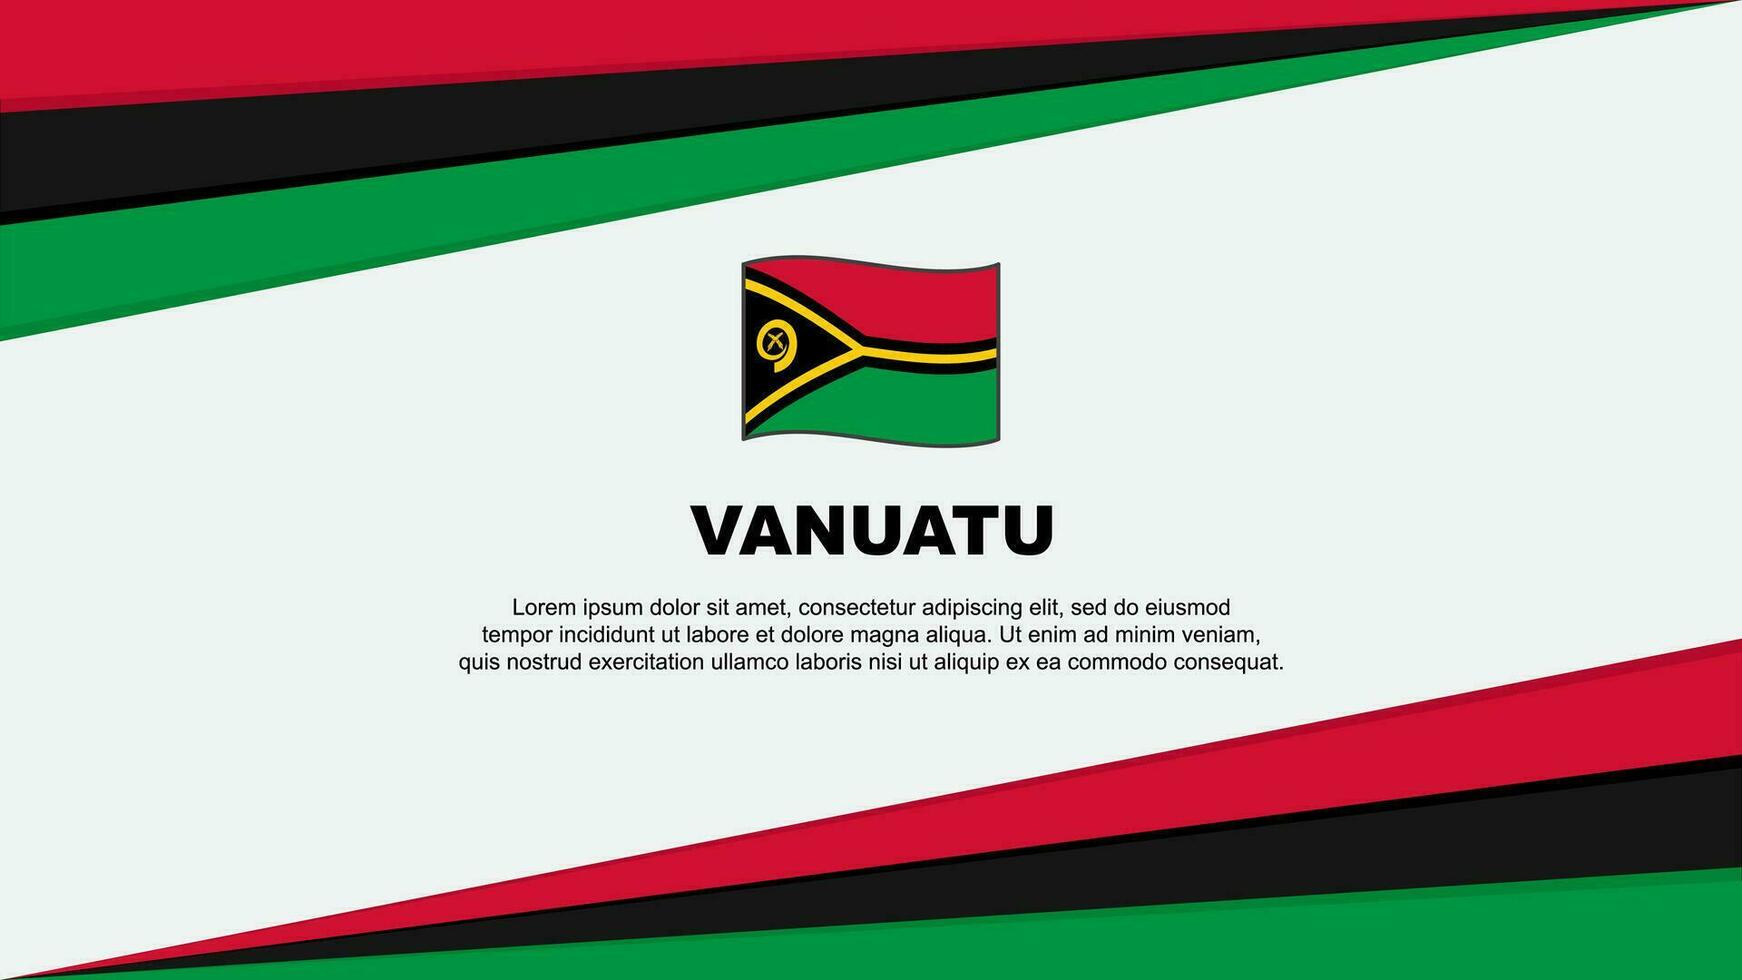 Vanuatu Flag Abstract Background Design Template. Vanuatu Independence Day Banner Cartoon Vector Illustration. Vanuatu Design